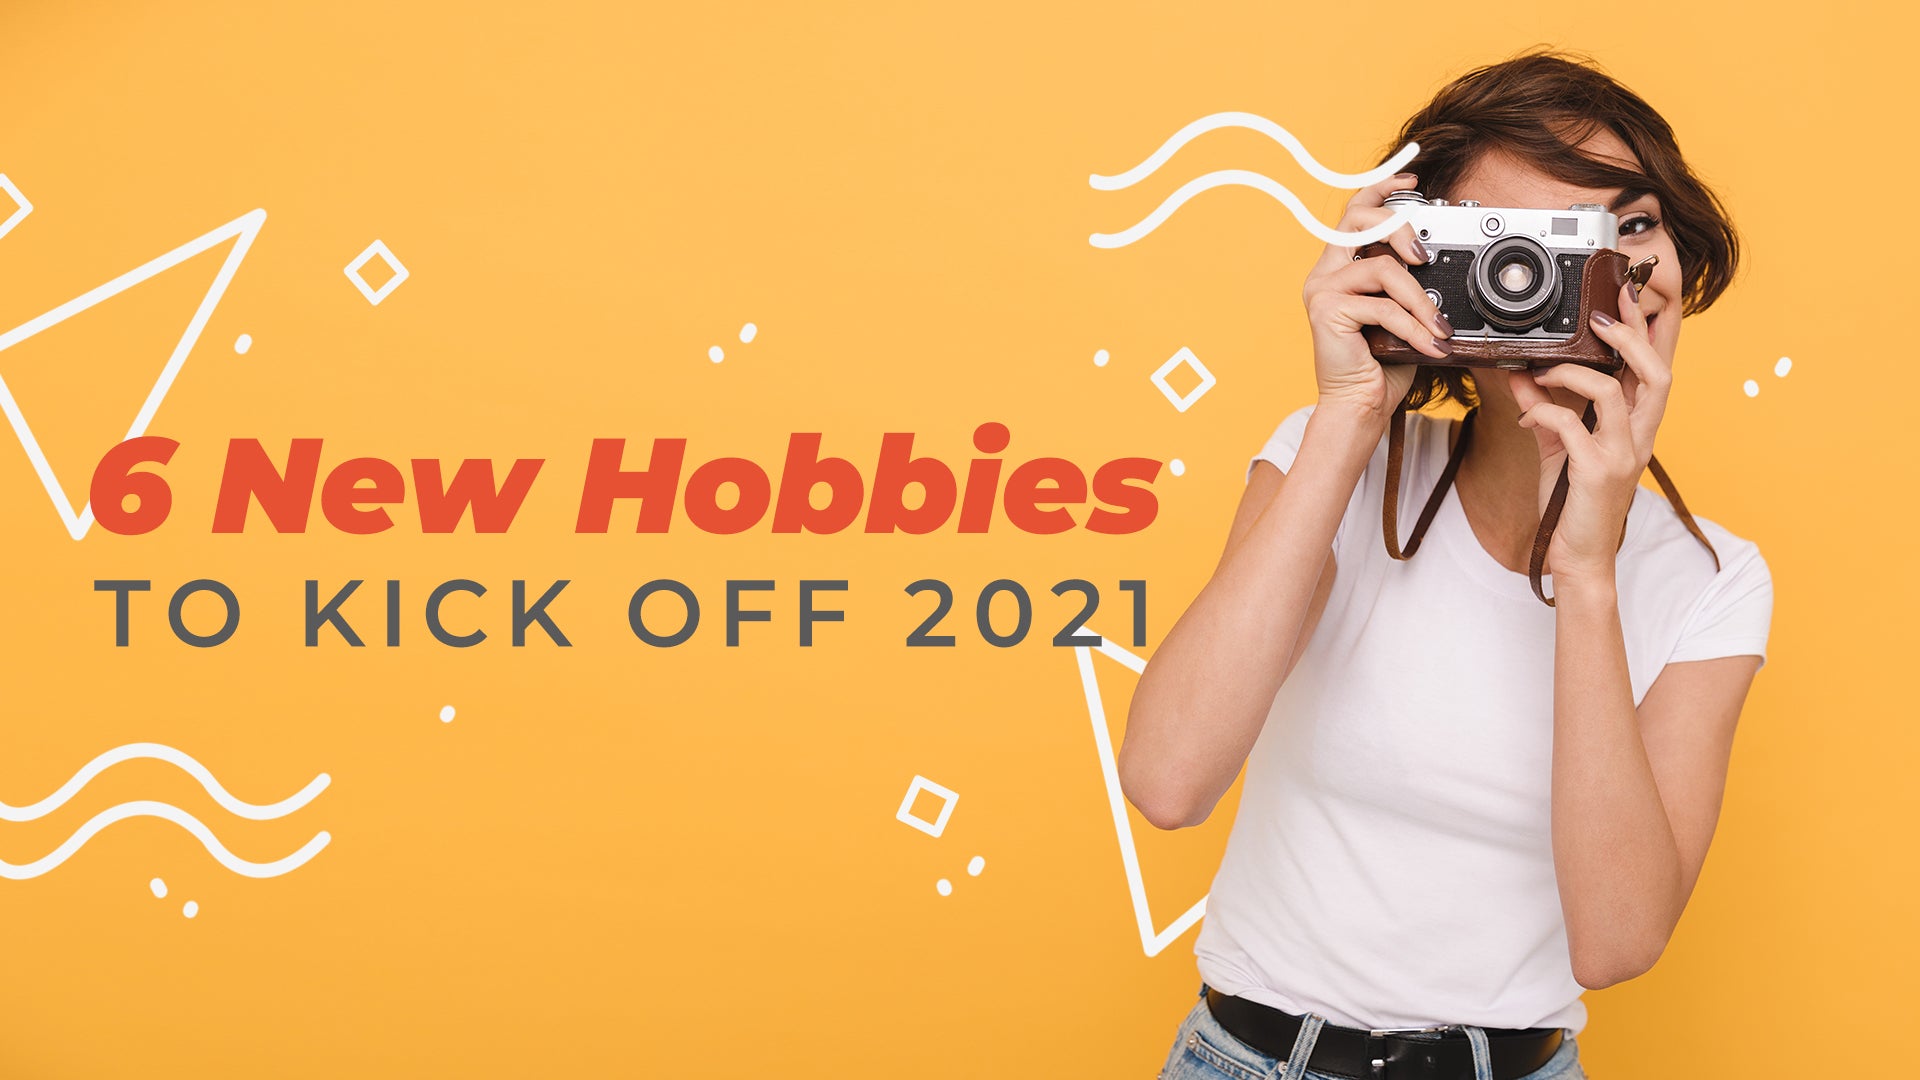 6 New Hobbies to Kick off 2021!